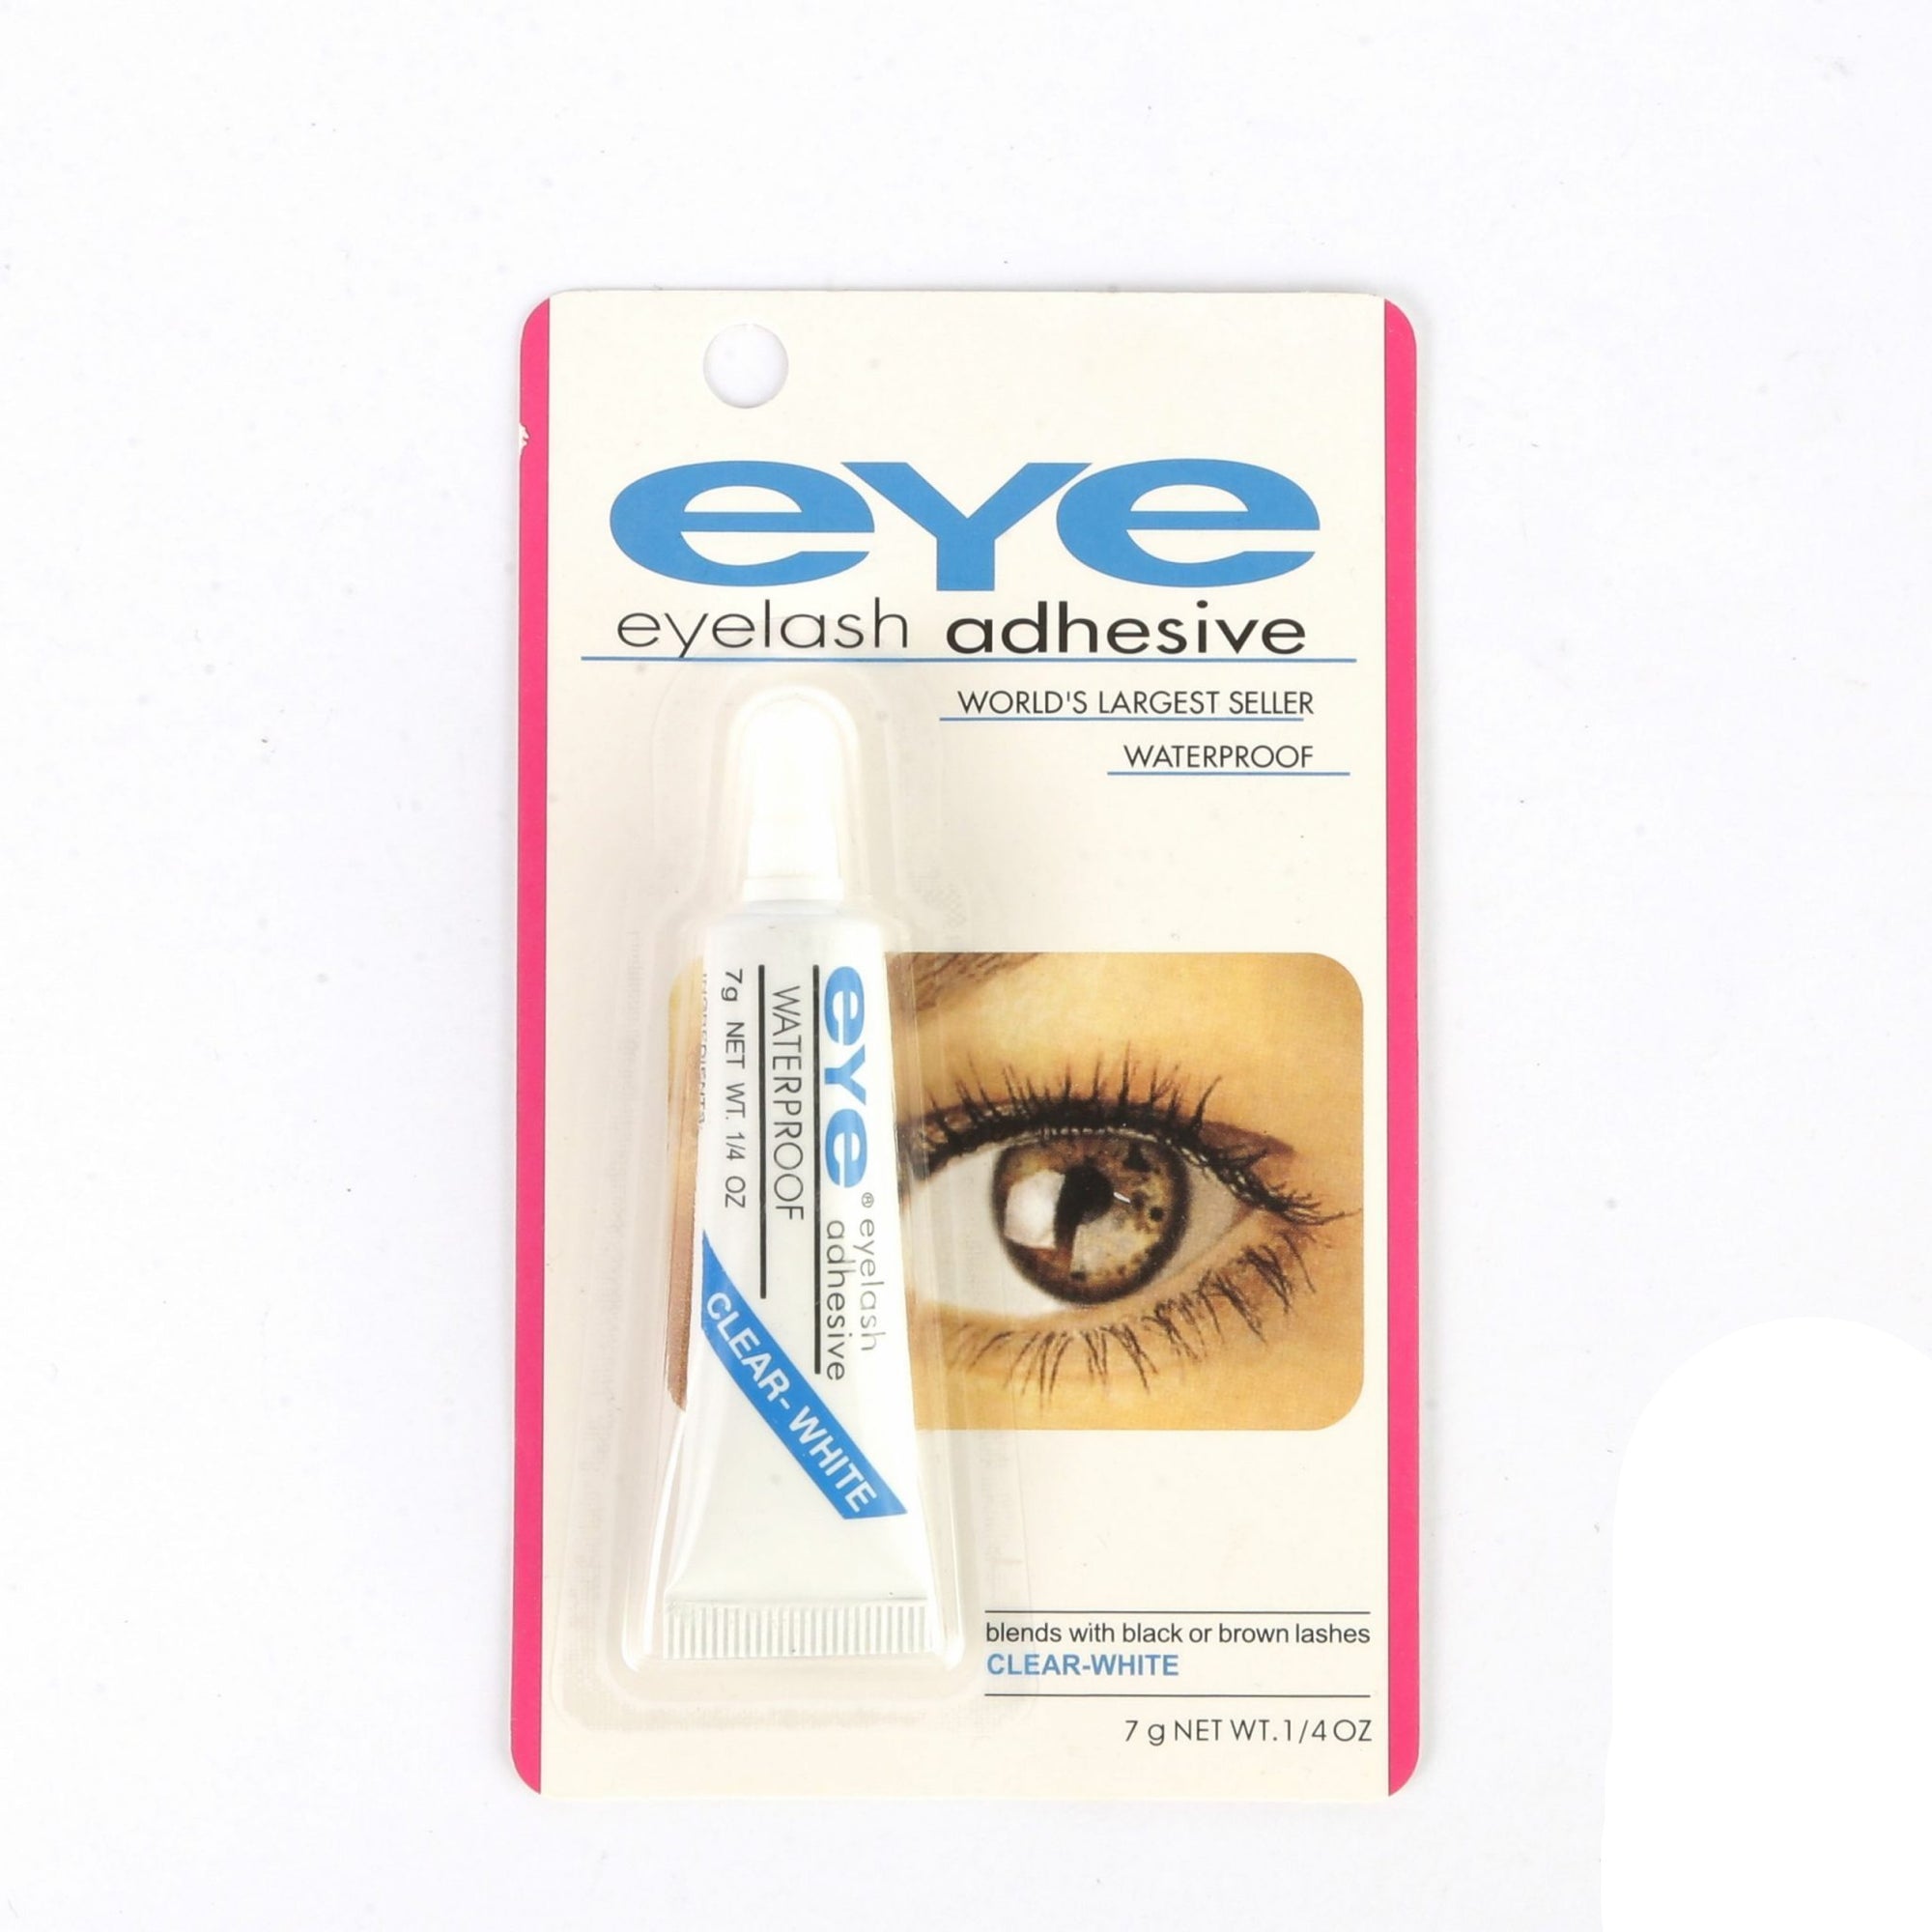 Eye Eyelash Adhesive Waterproof Glue Clear White 7g freeshipping - lasertag.pk